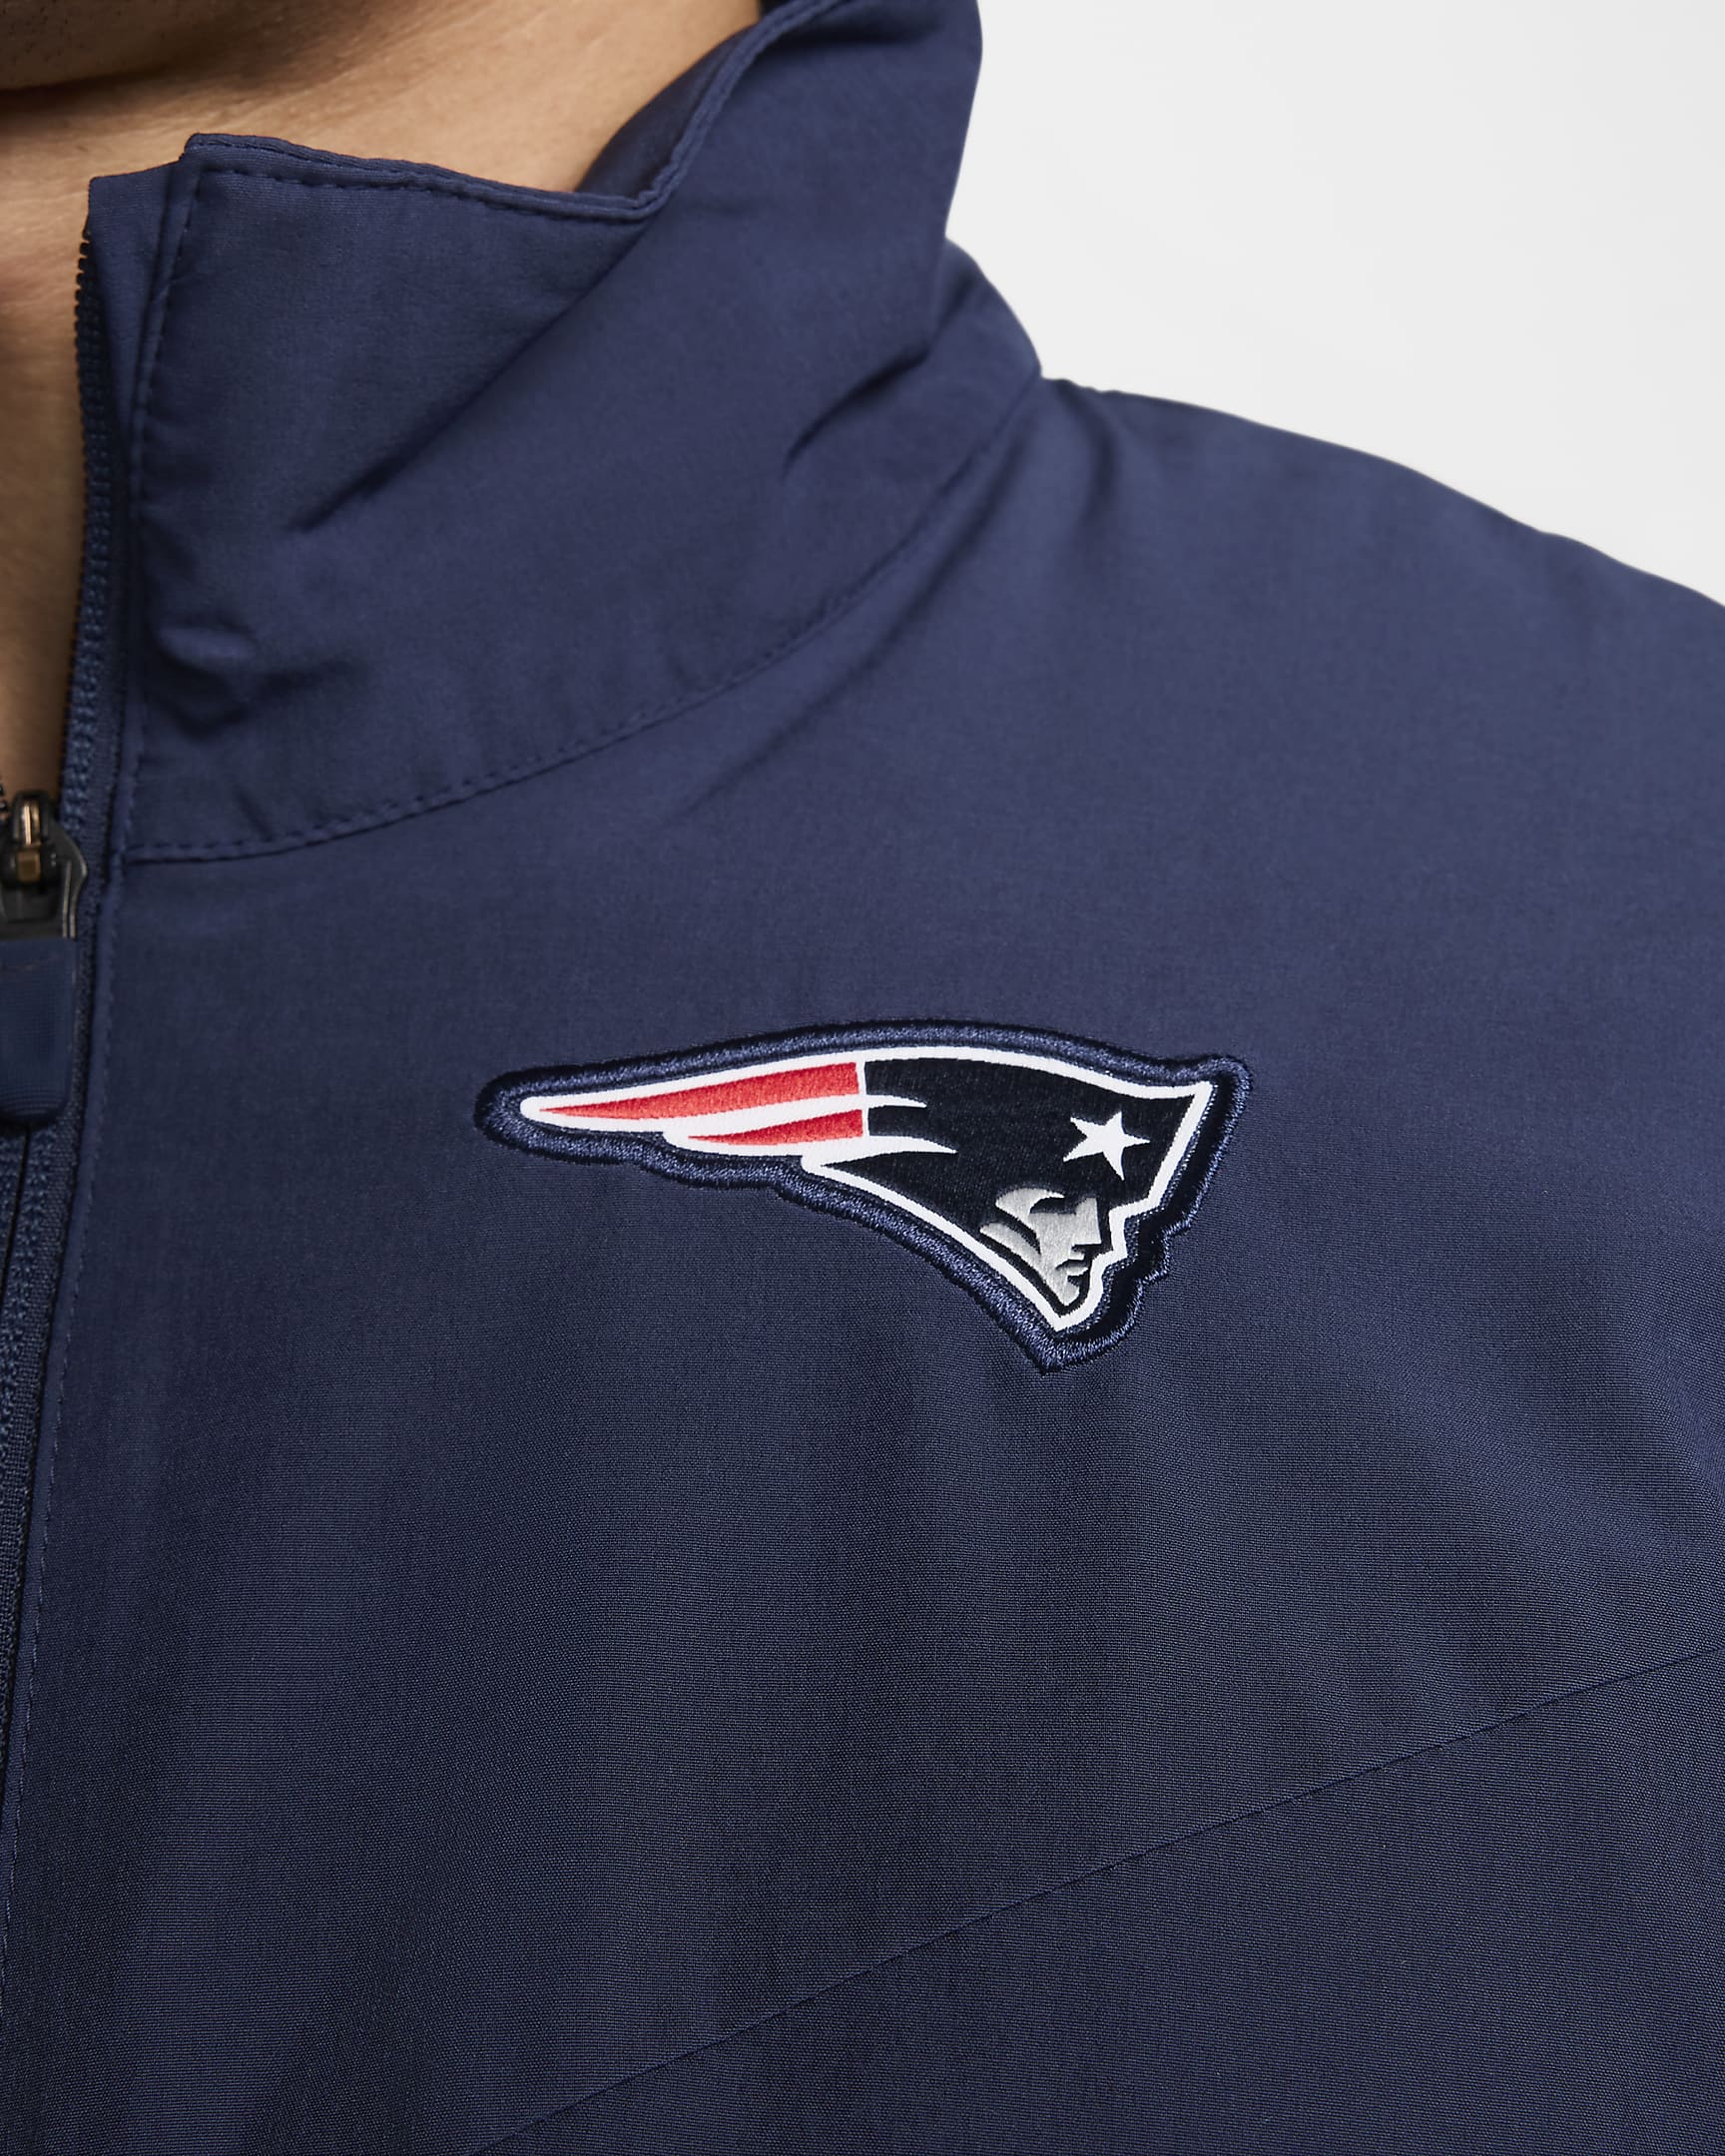 Nike Sideline Repel (NFL New England Patriots) Men's Full-Zip Jacket - College Navy